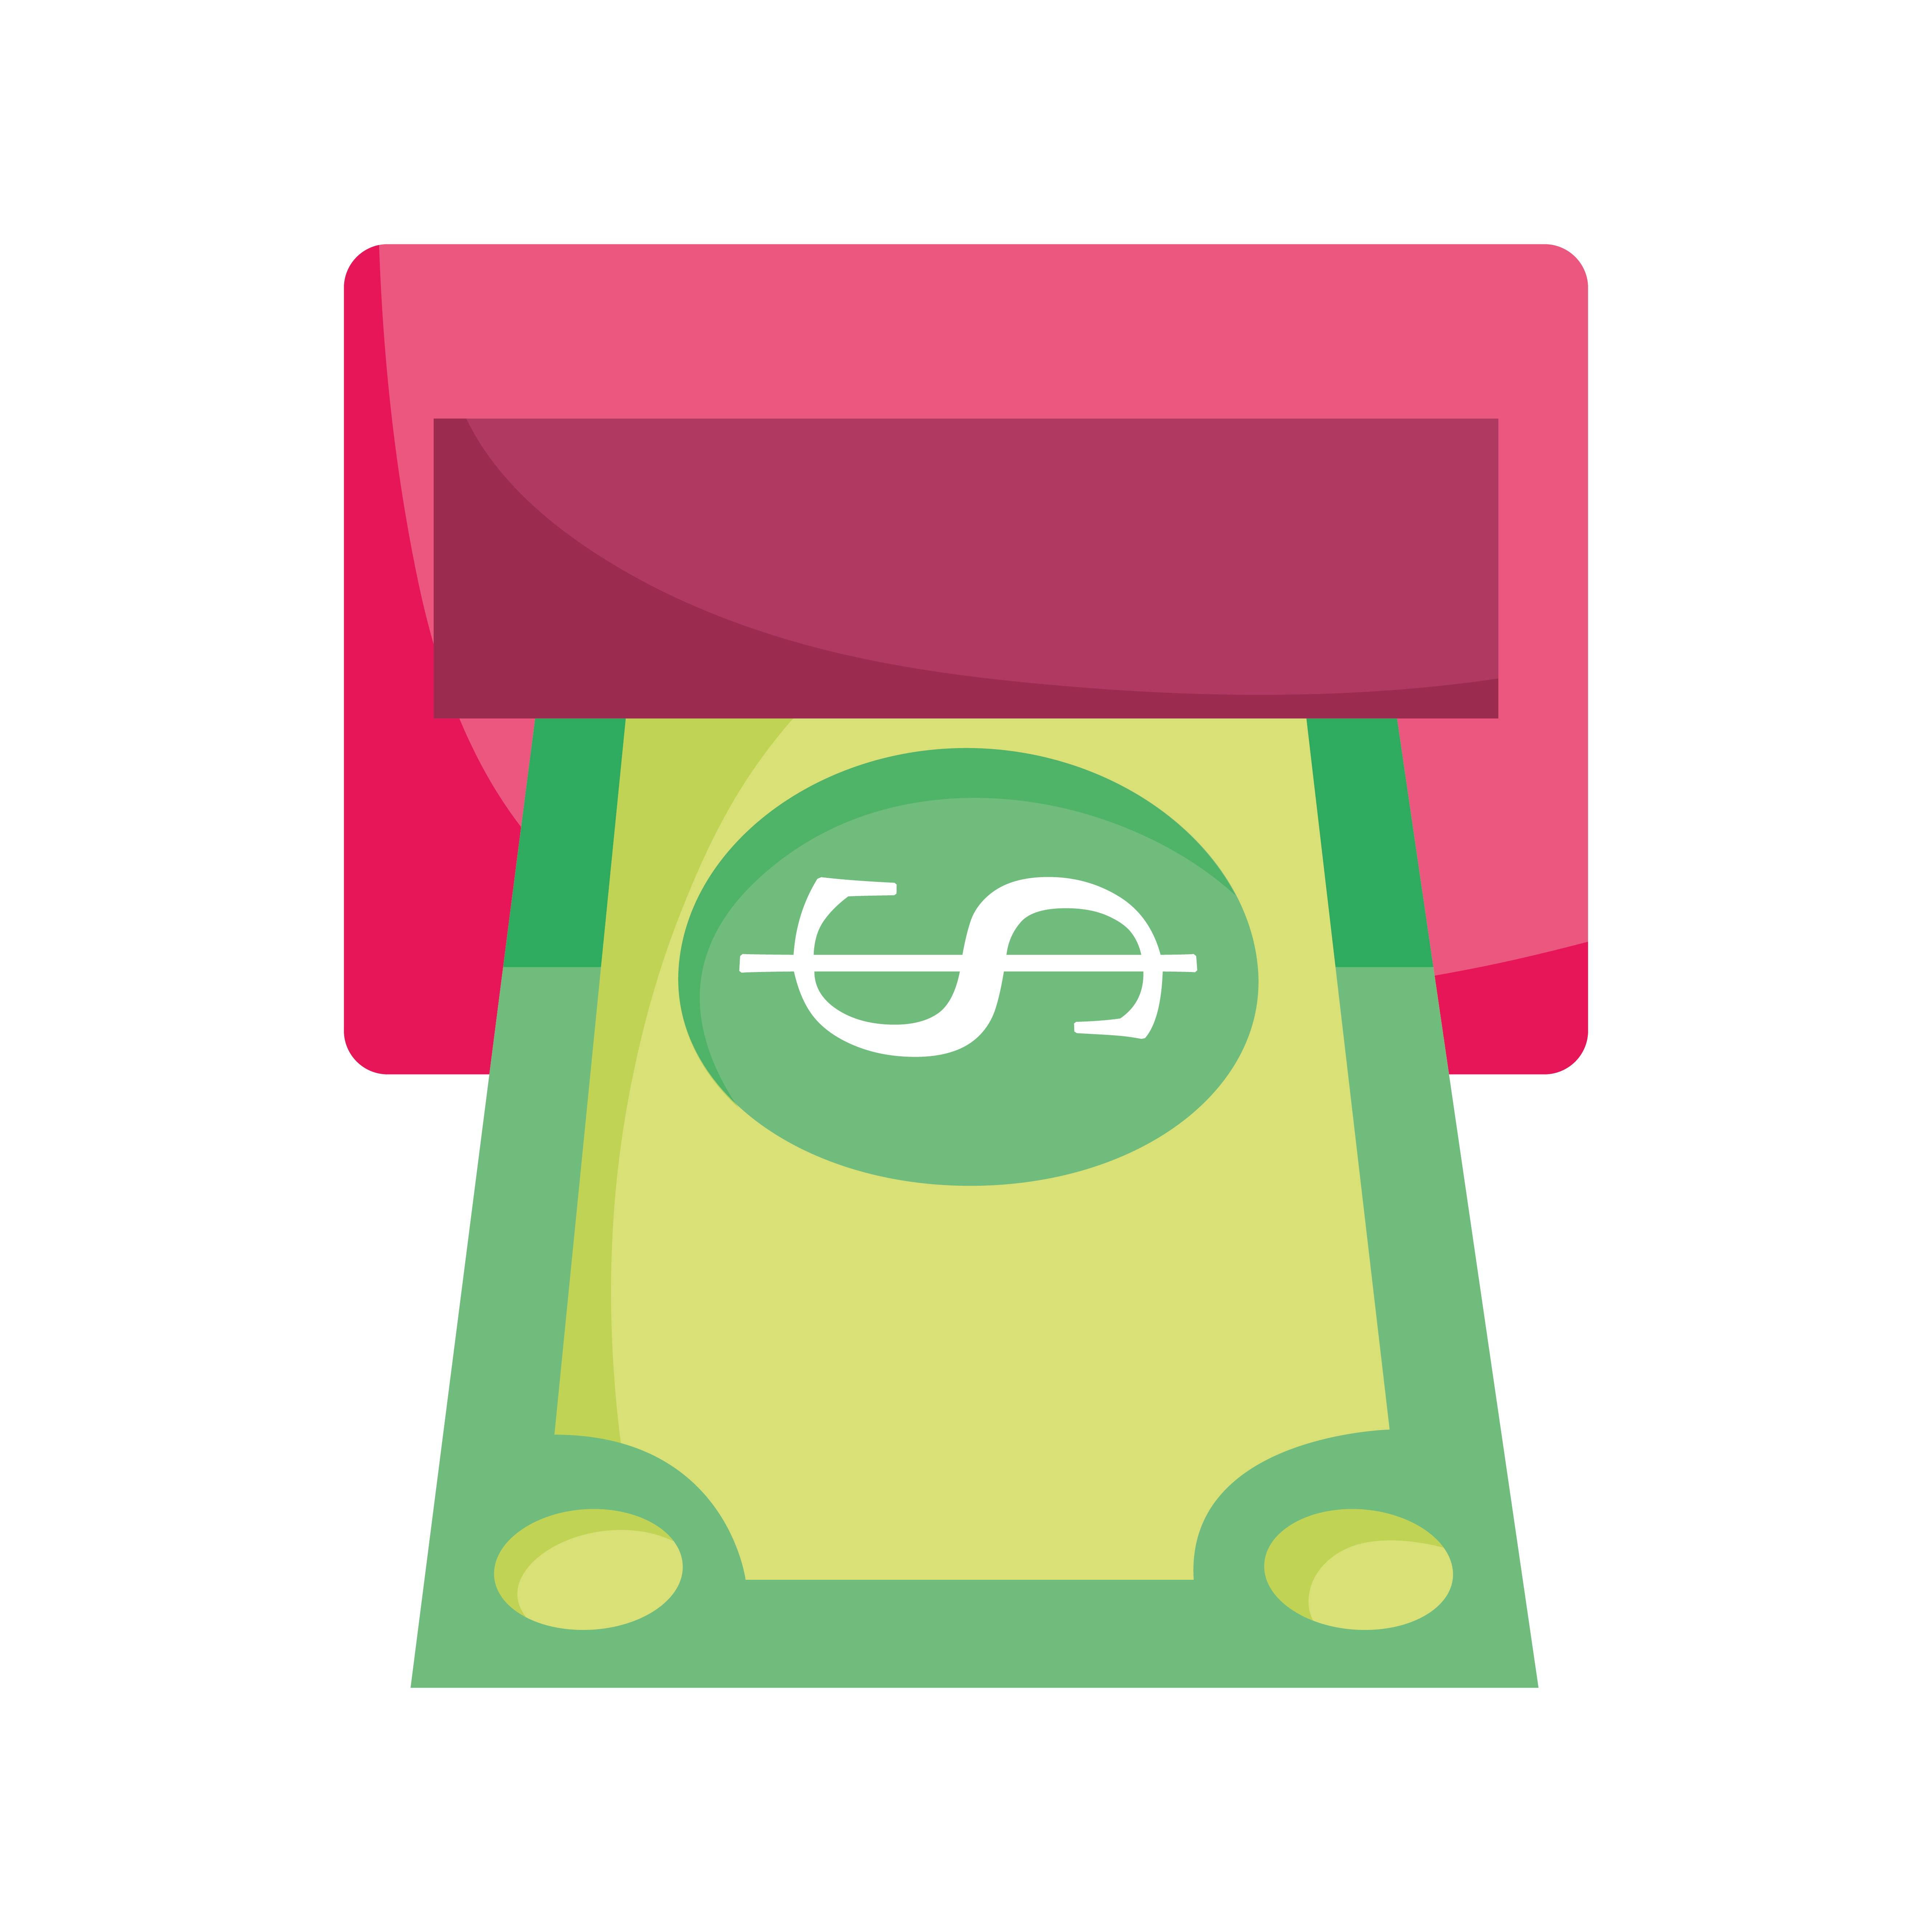 Online Payment Money Banknote Atm Cash Ecommerce Market Shopping Mobile App Download Free Vectors Clipart Graphics Vector Art